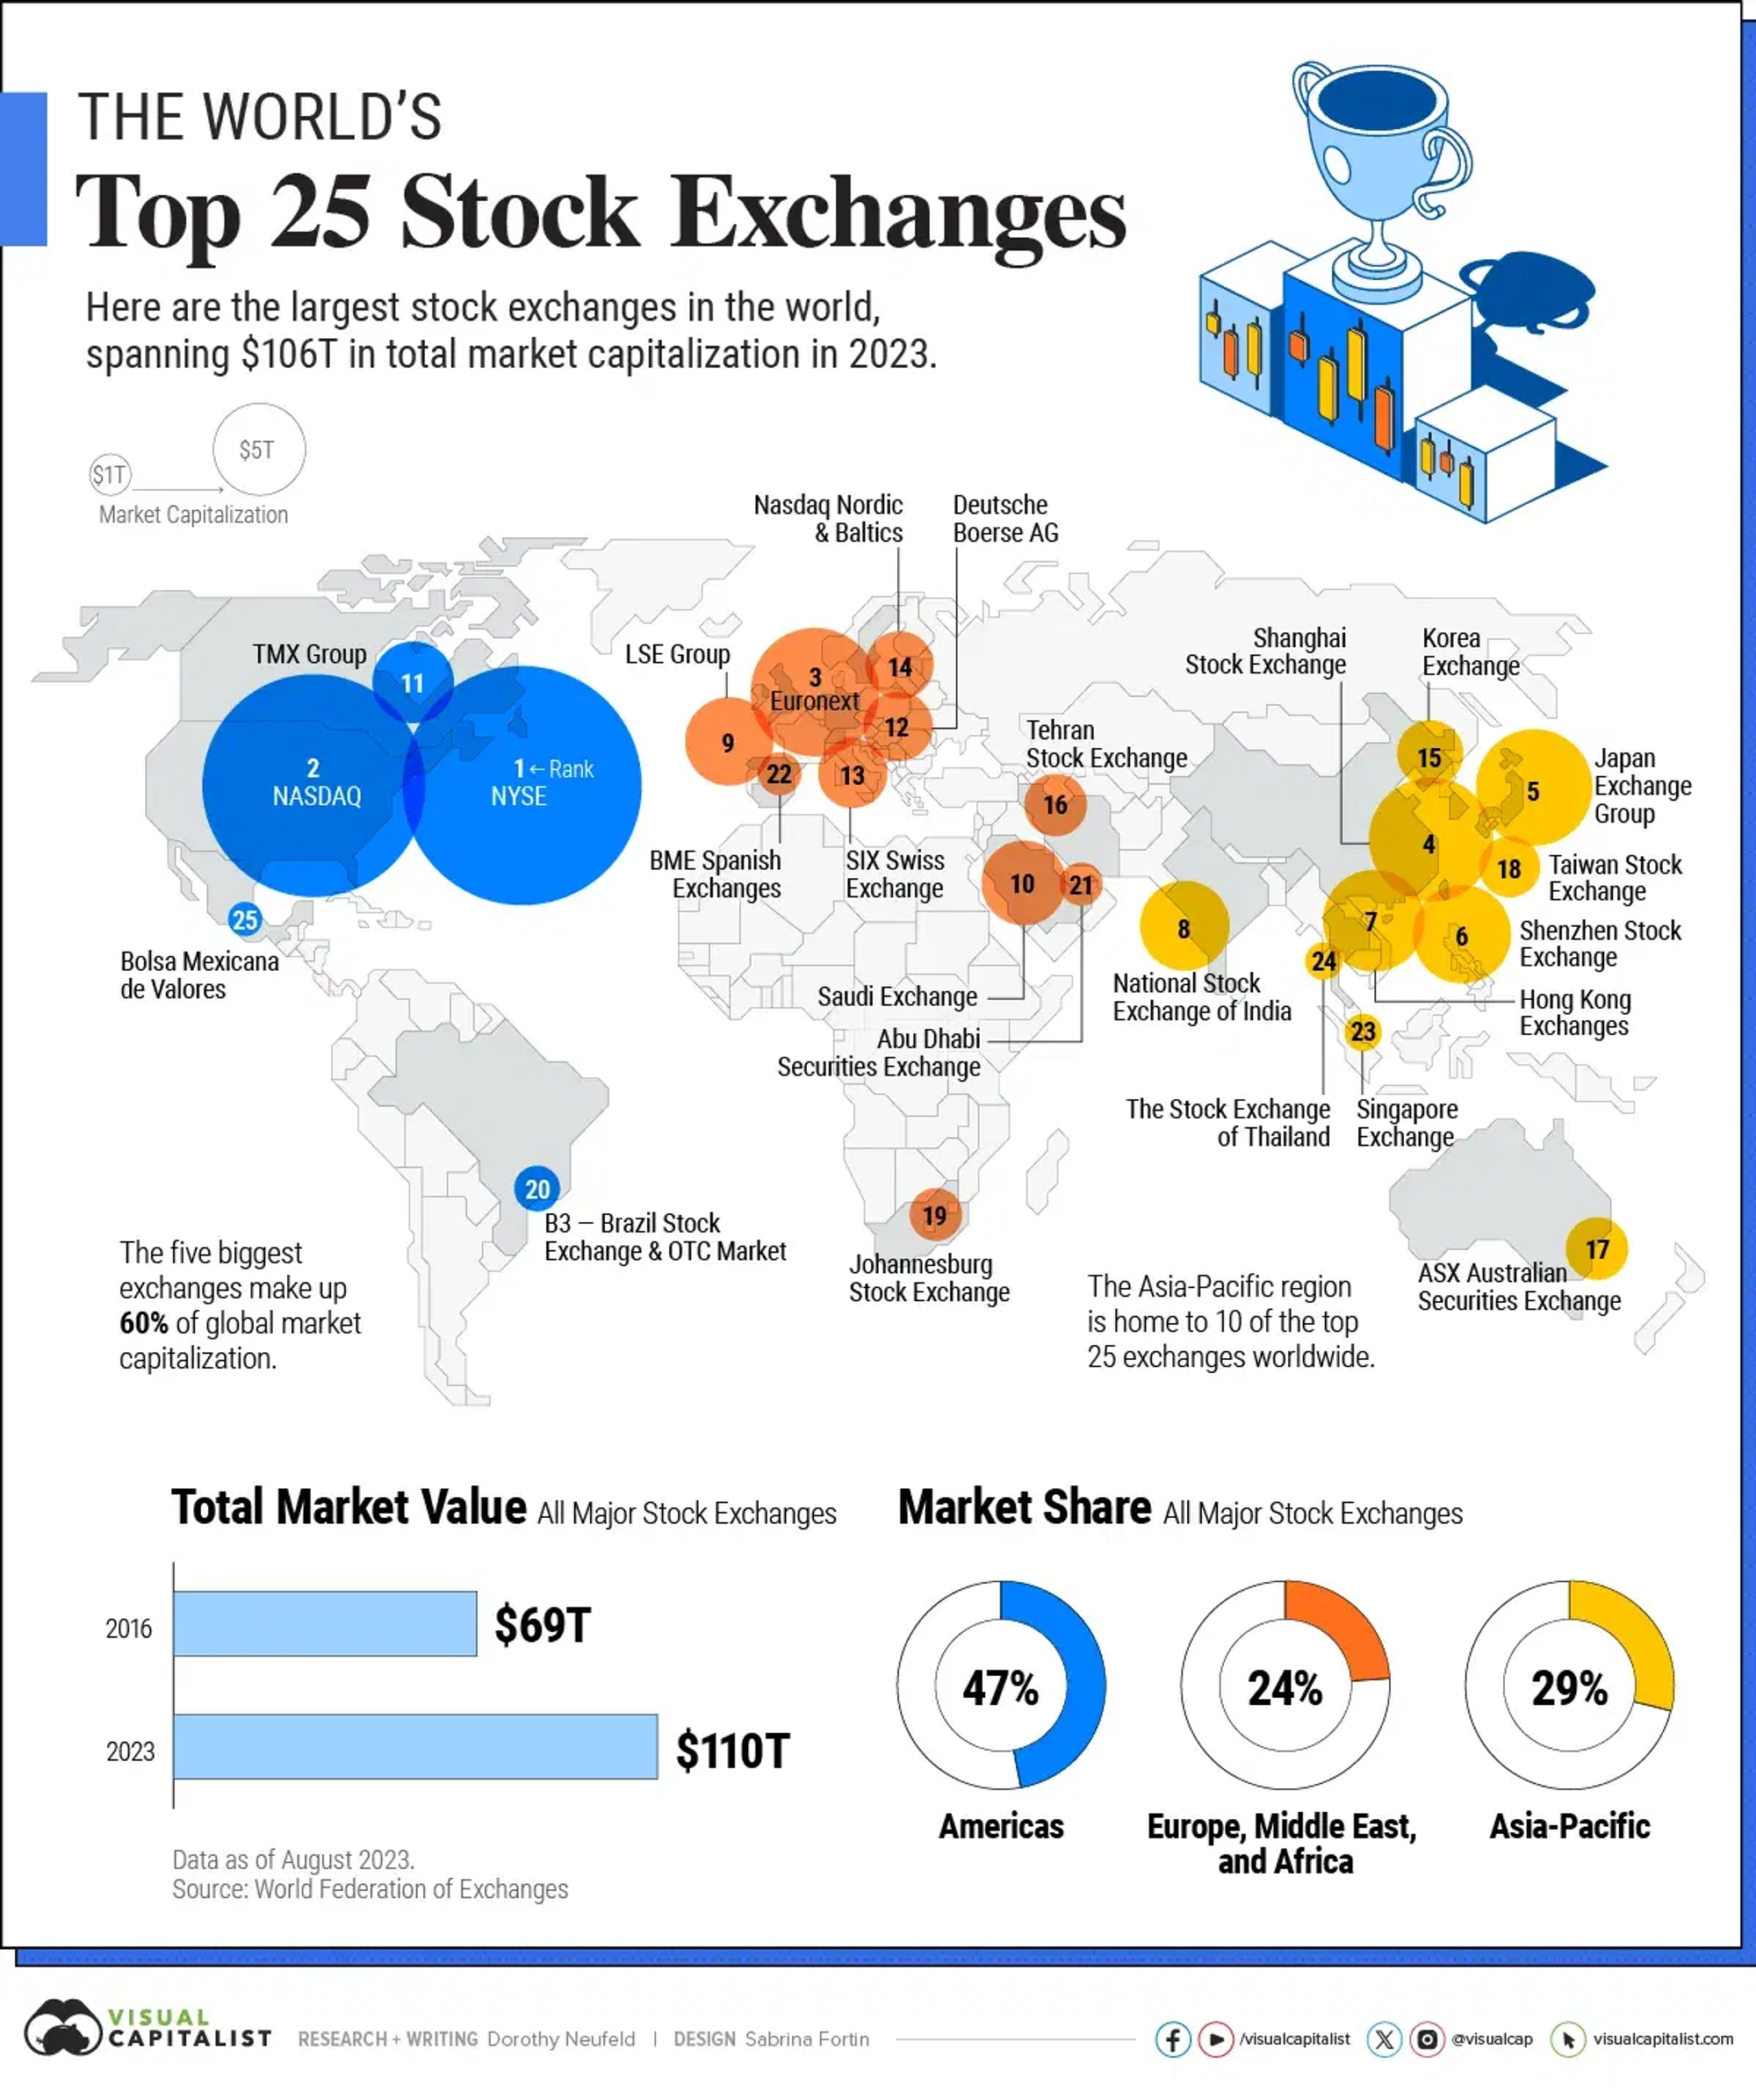 https://posts.voronoiapp.com/markets/The-Worlds-Top-25-Stock-Exchanges-294